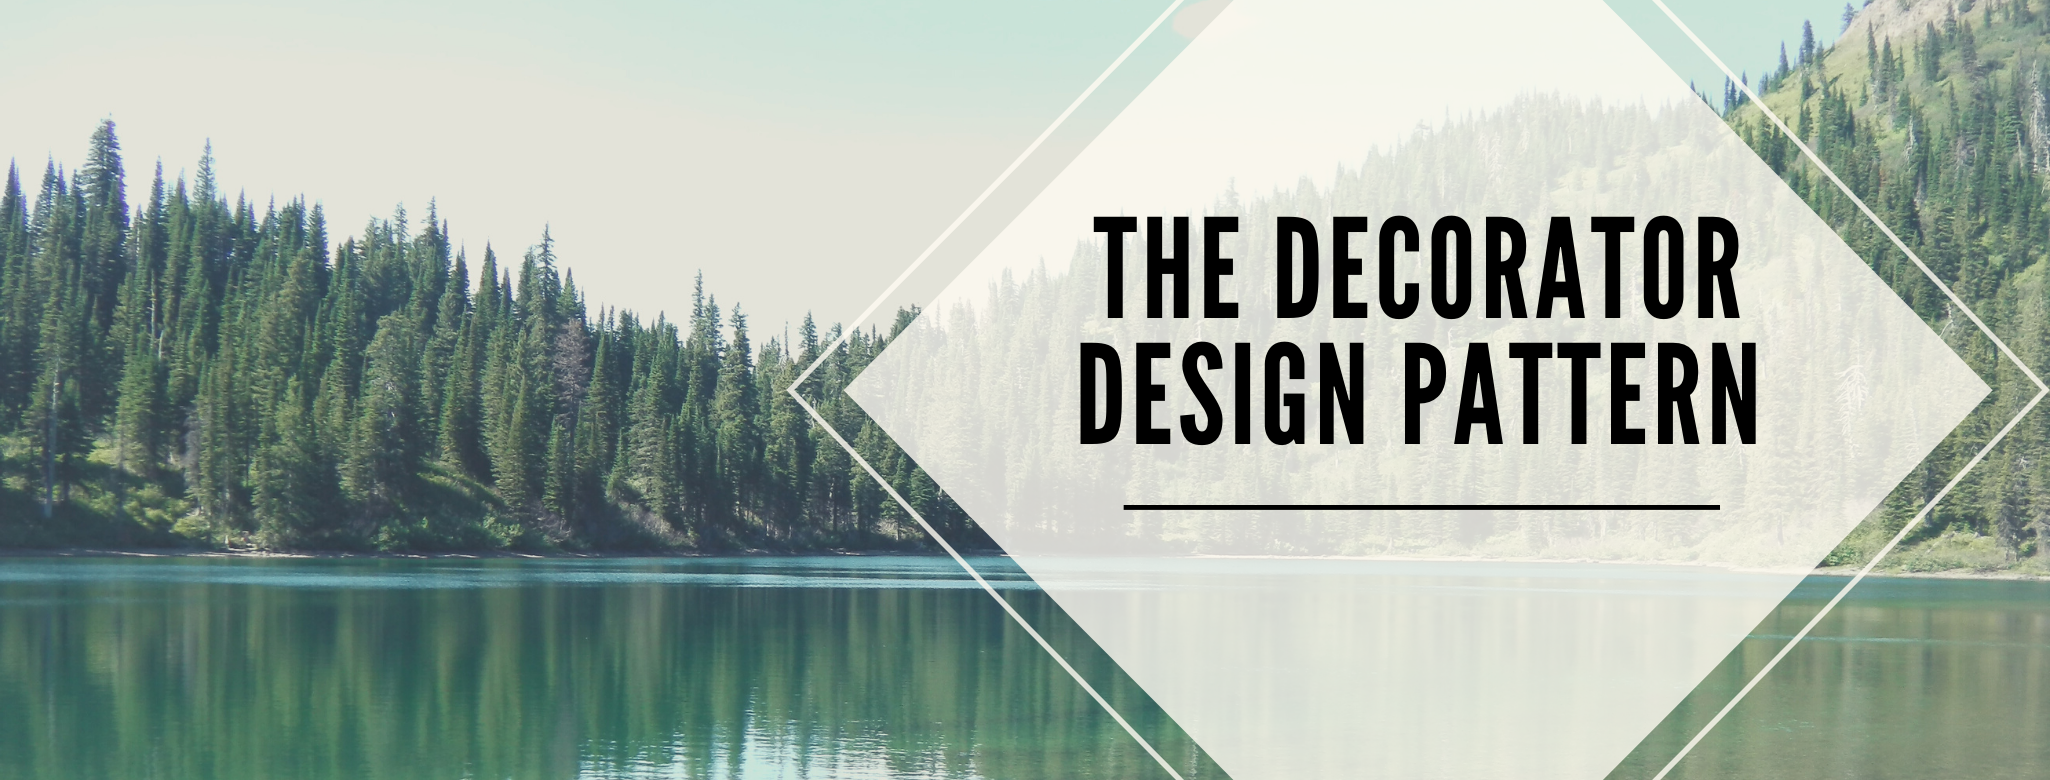 The Decorator Design Pattern